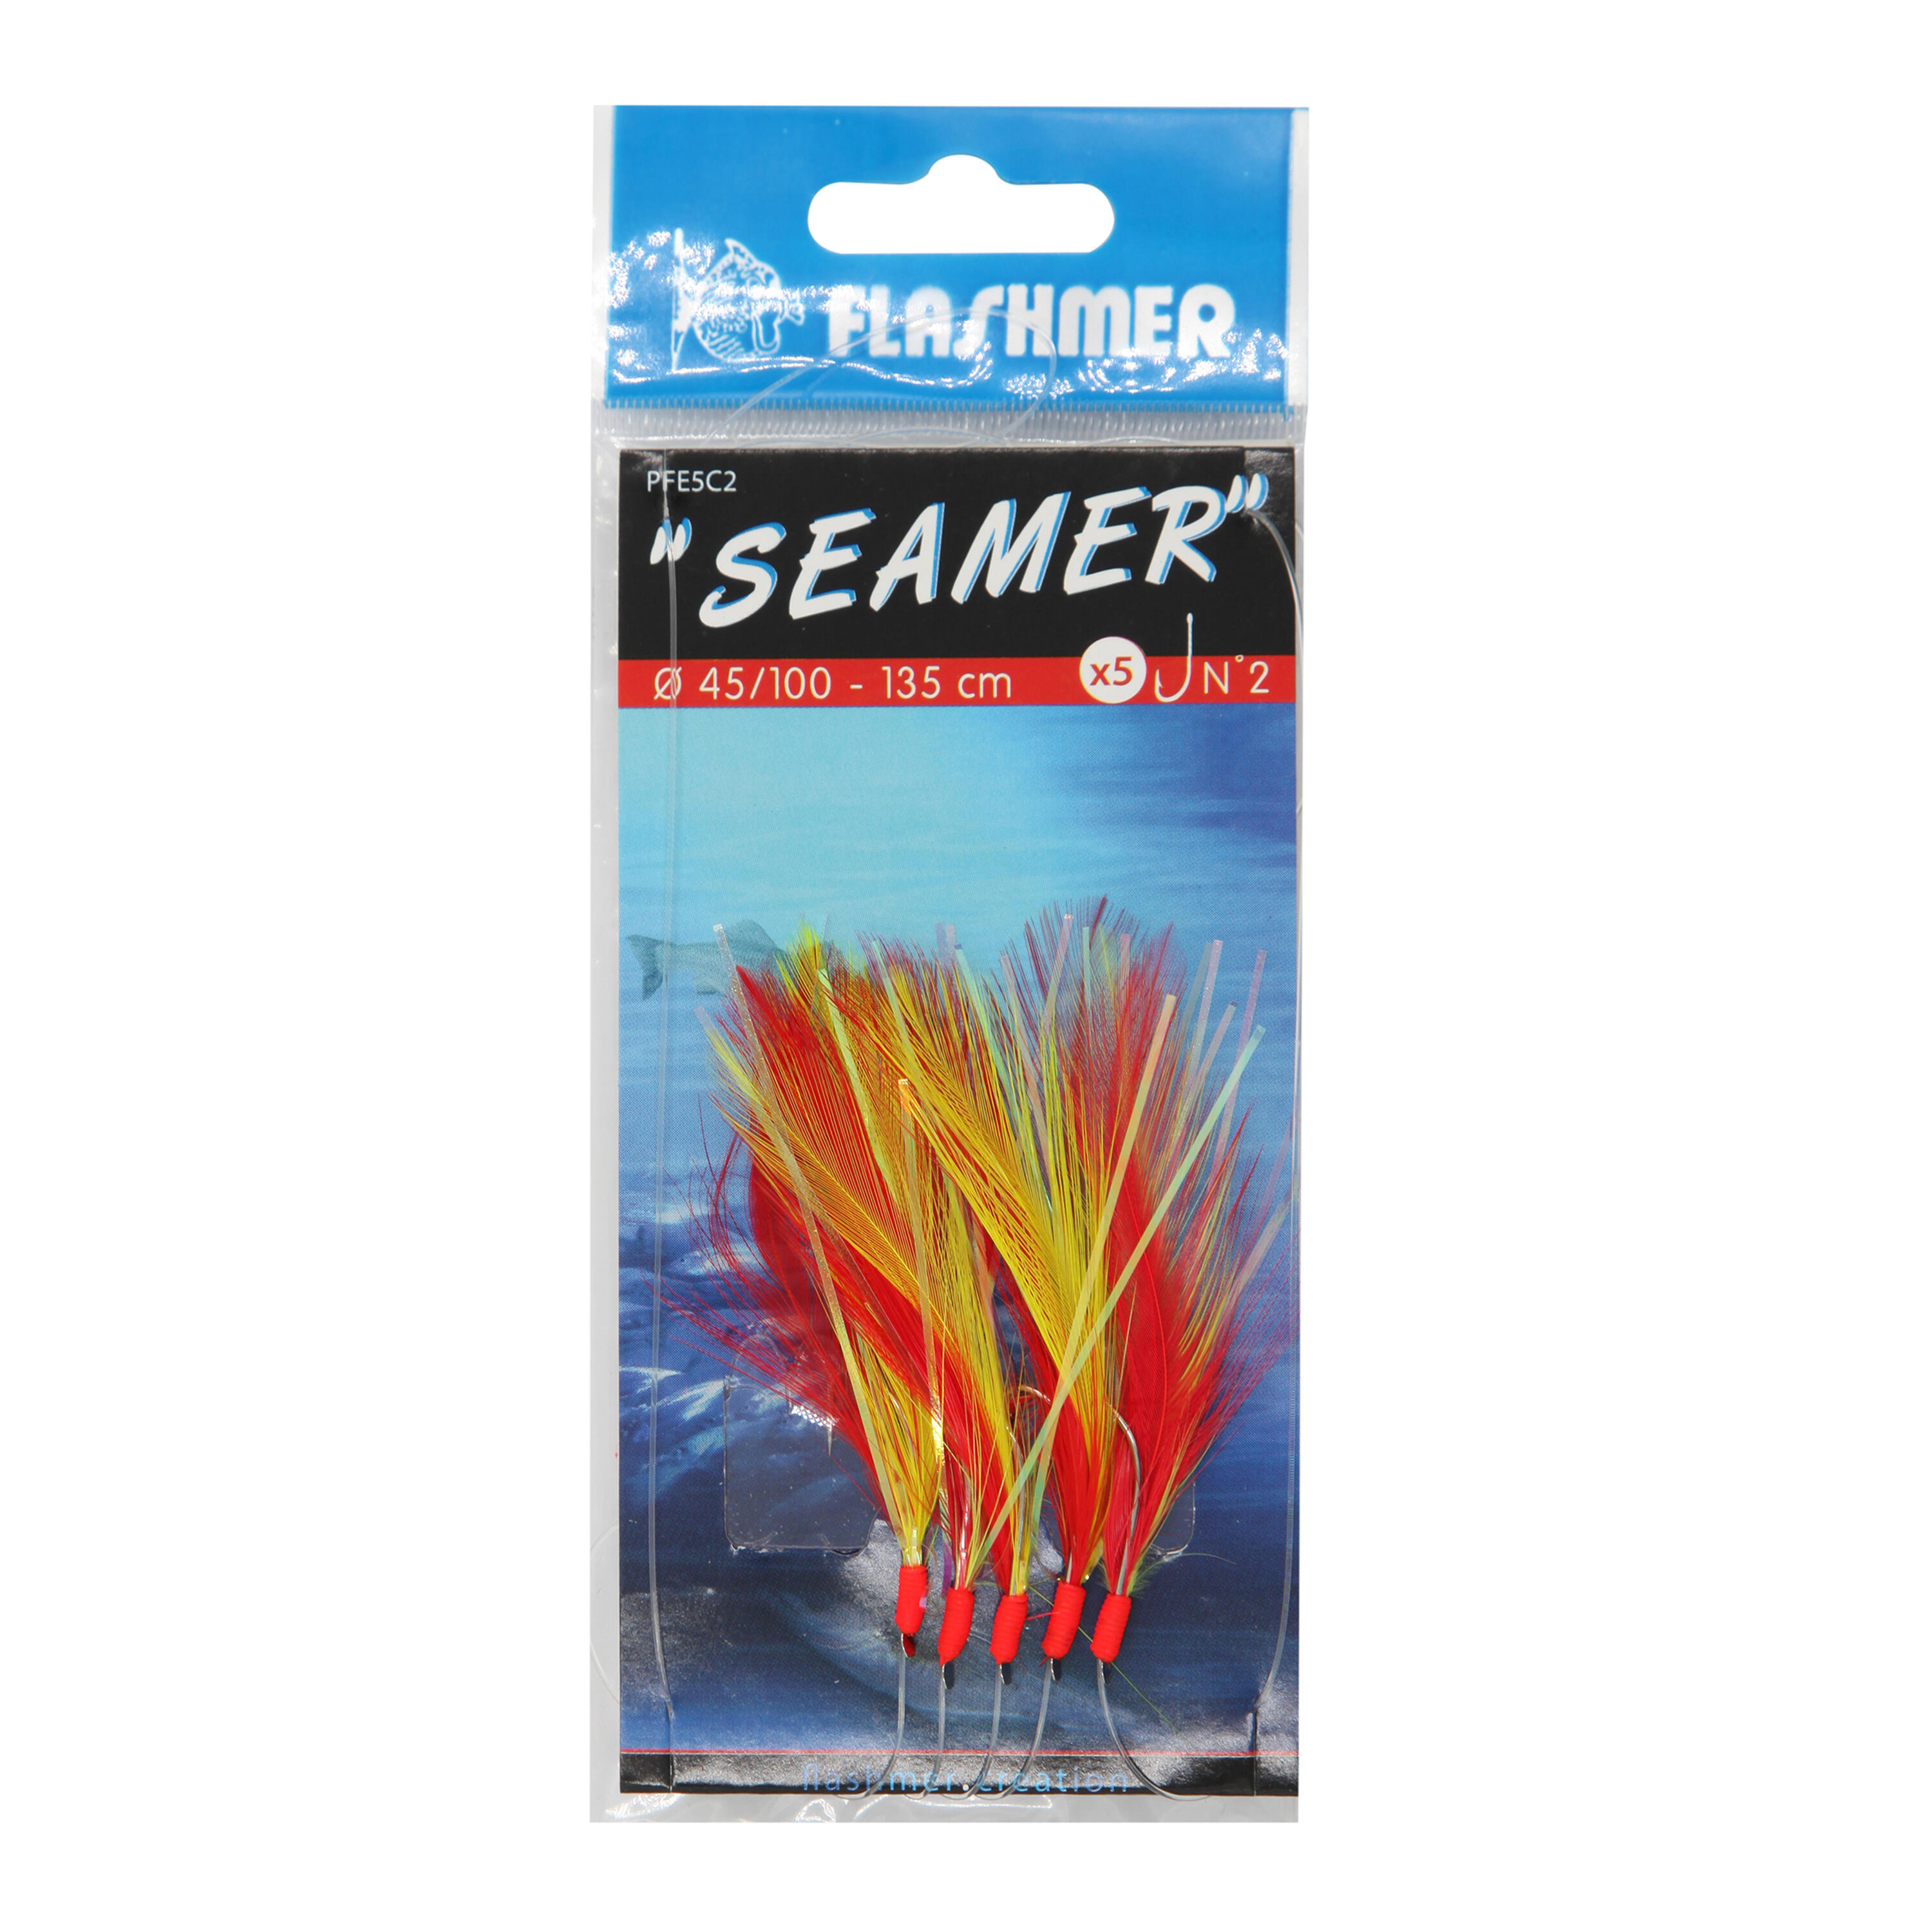 FLASHMER 3 "Seamer" Sets of Feathers 5 x Hook No. 1/0